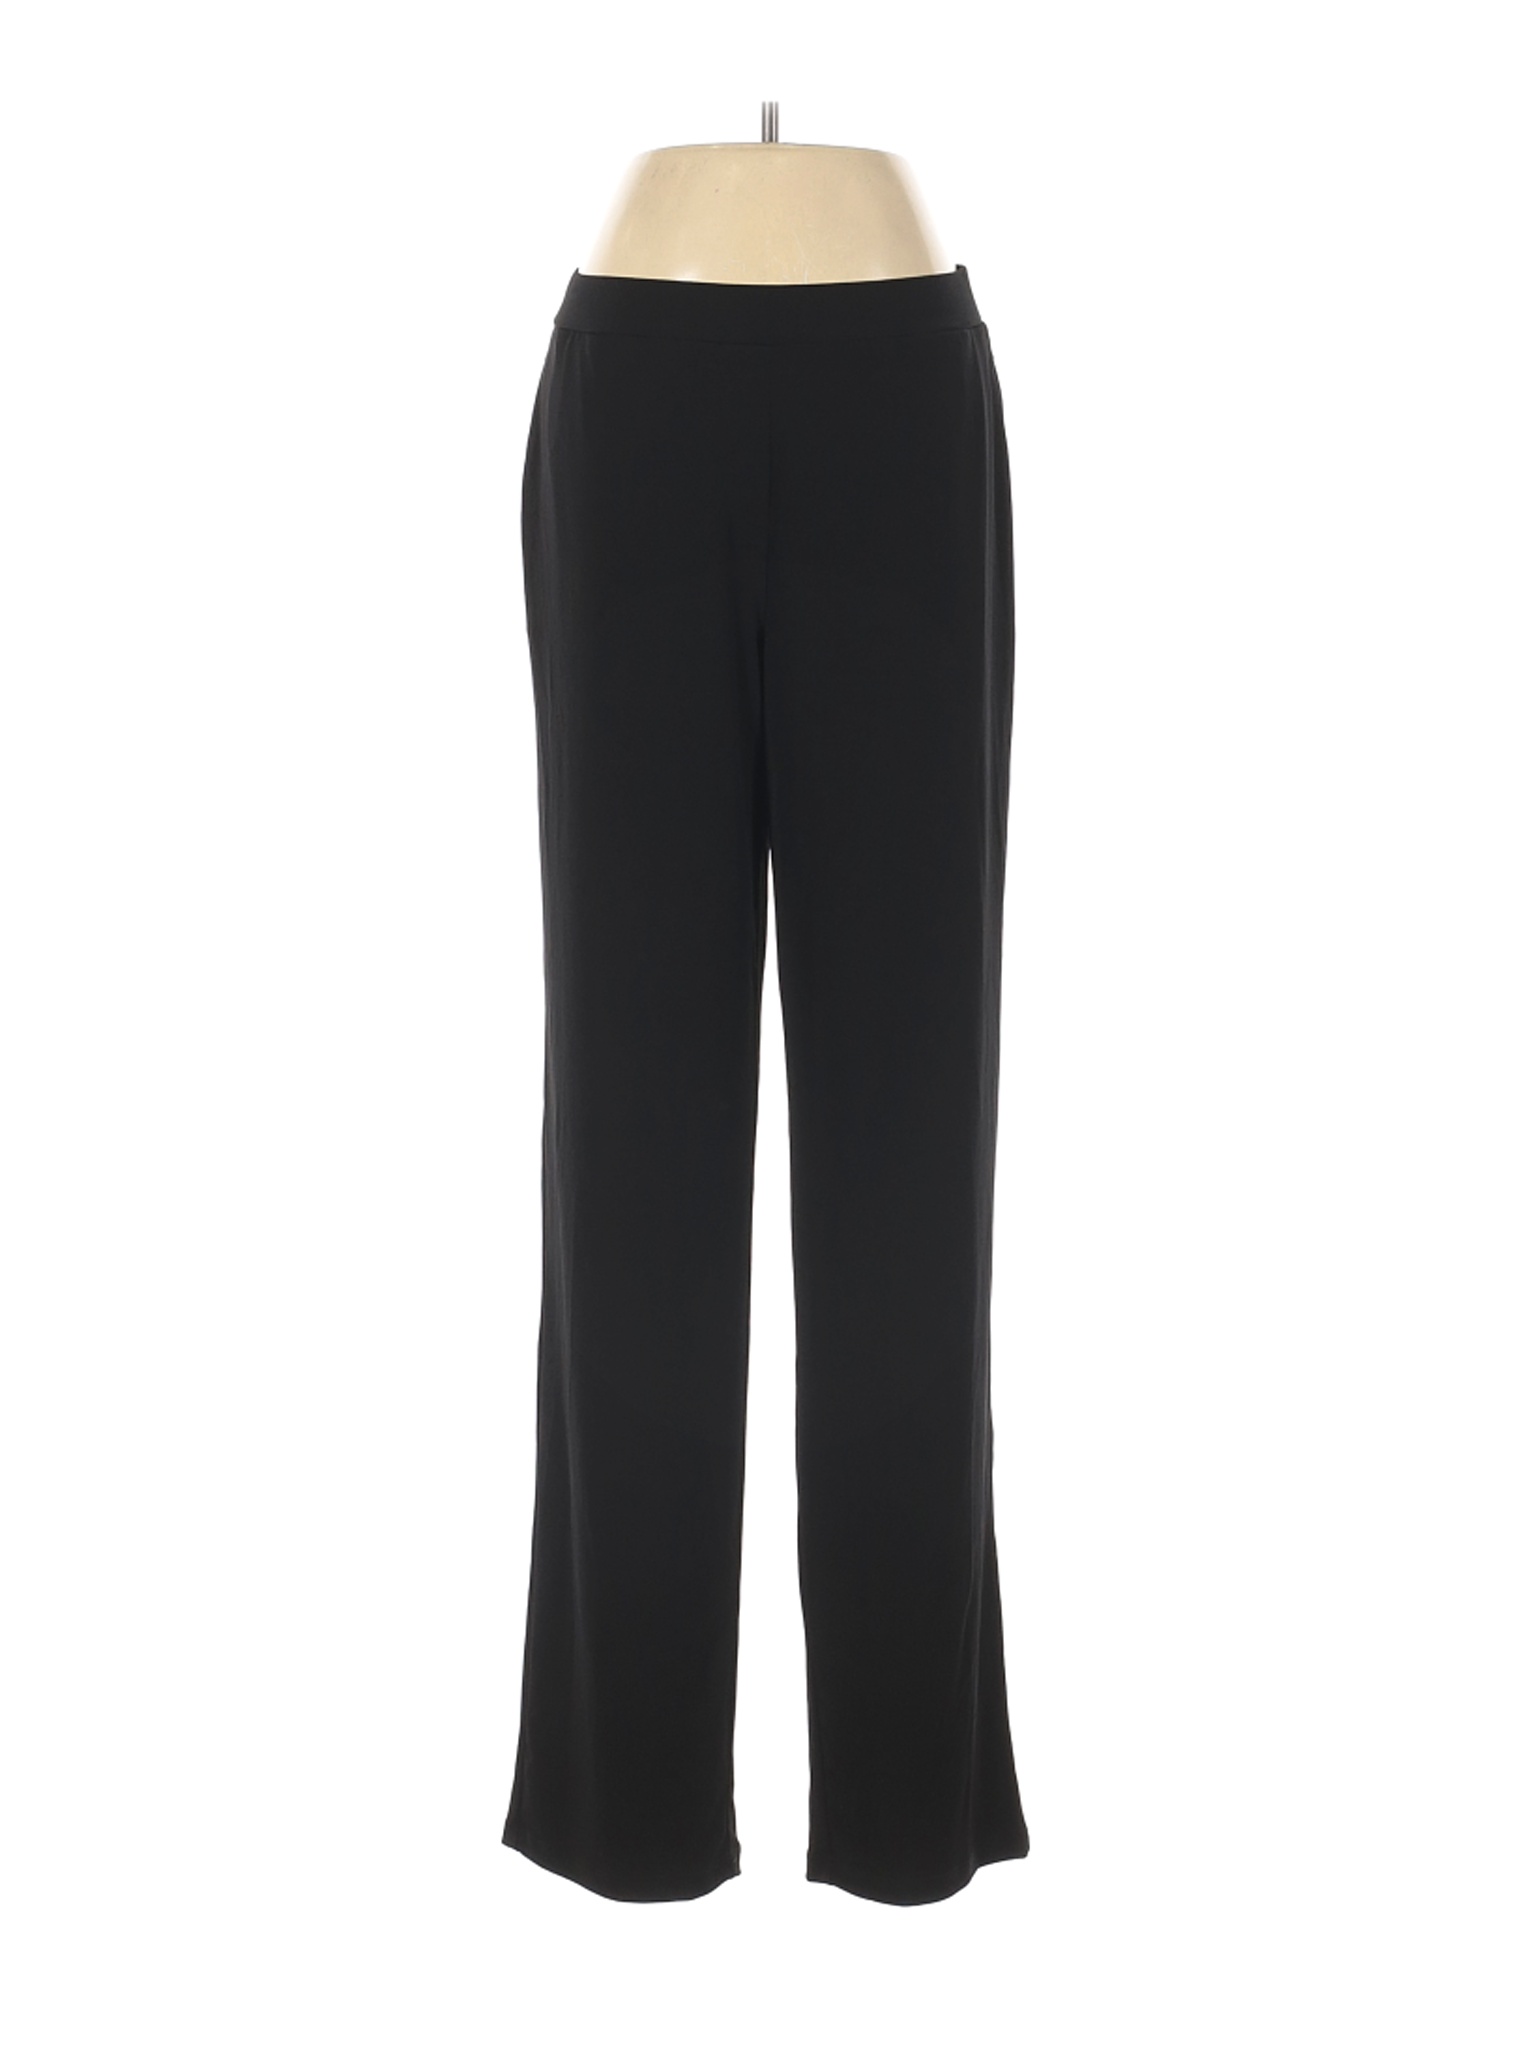 Susan Graver Women Black Casual Pants S Tall | eBay